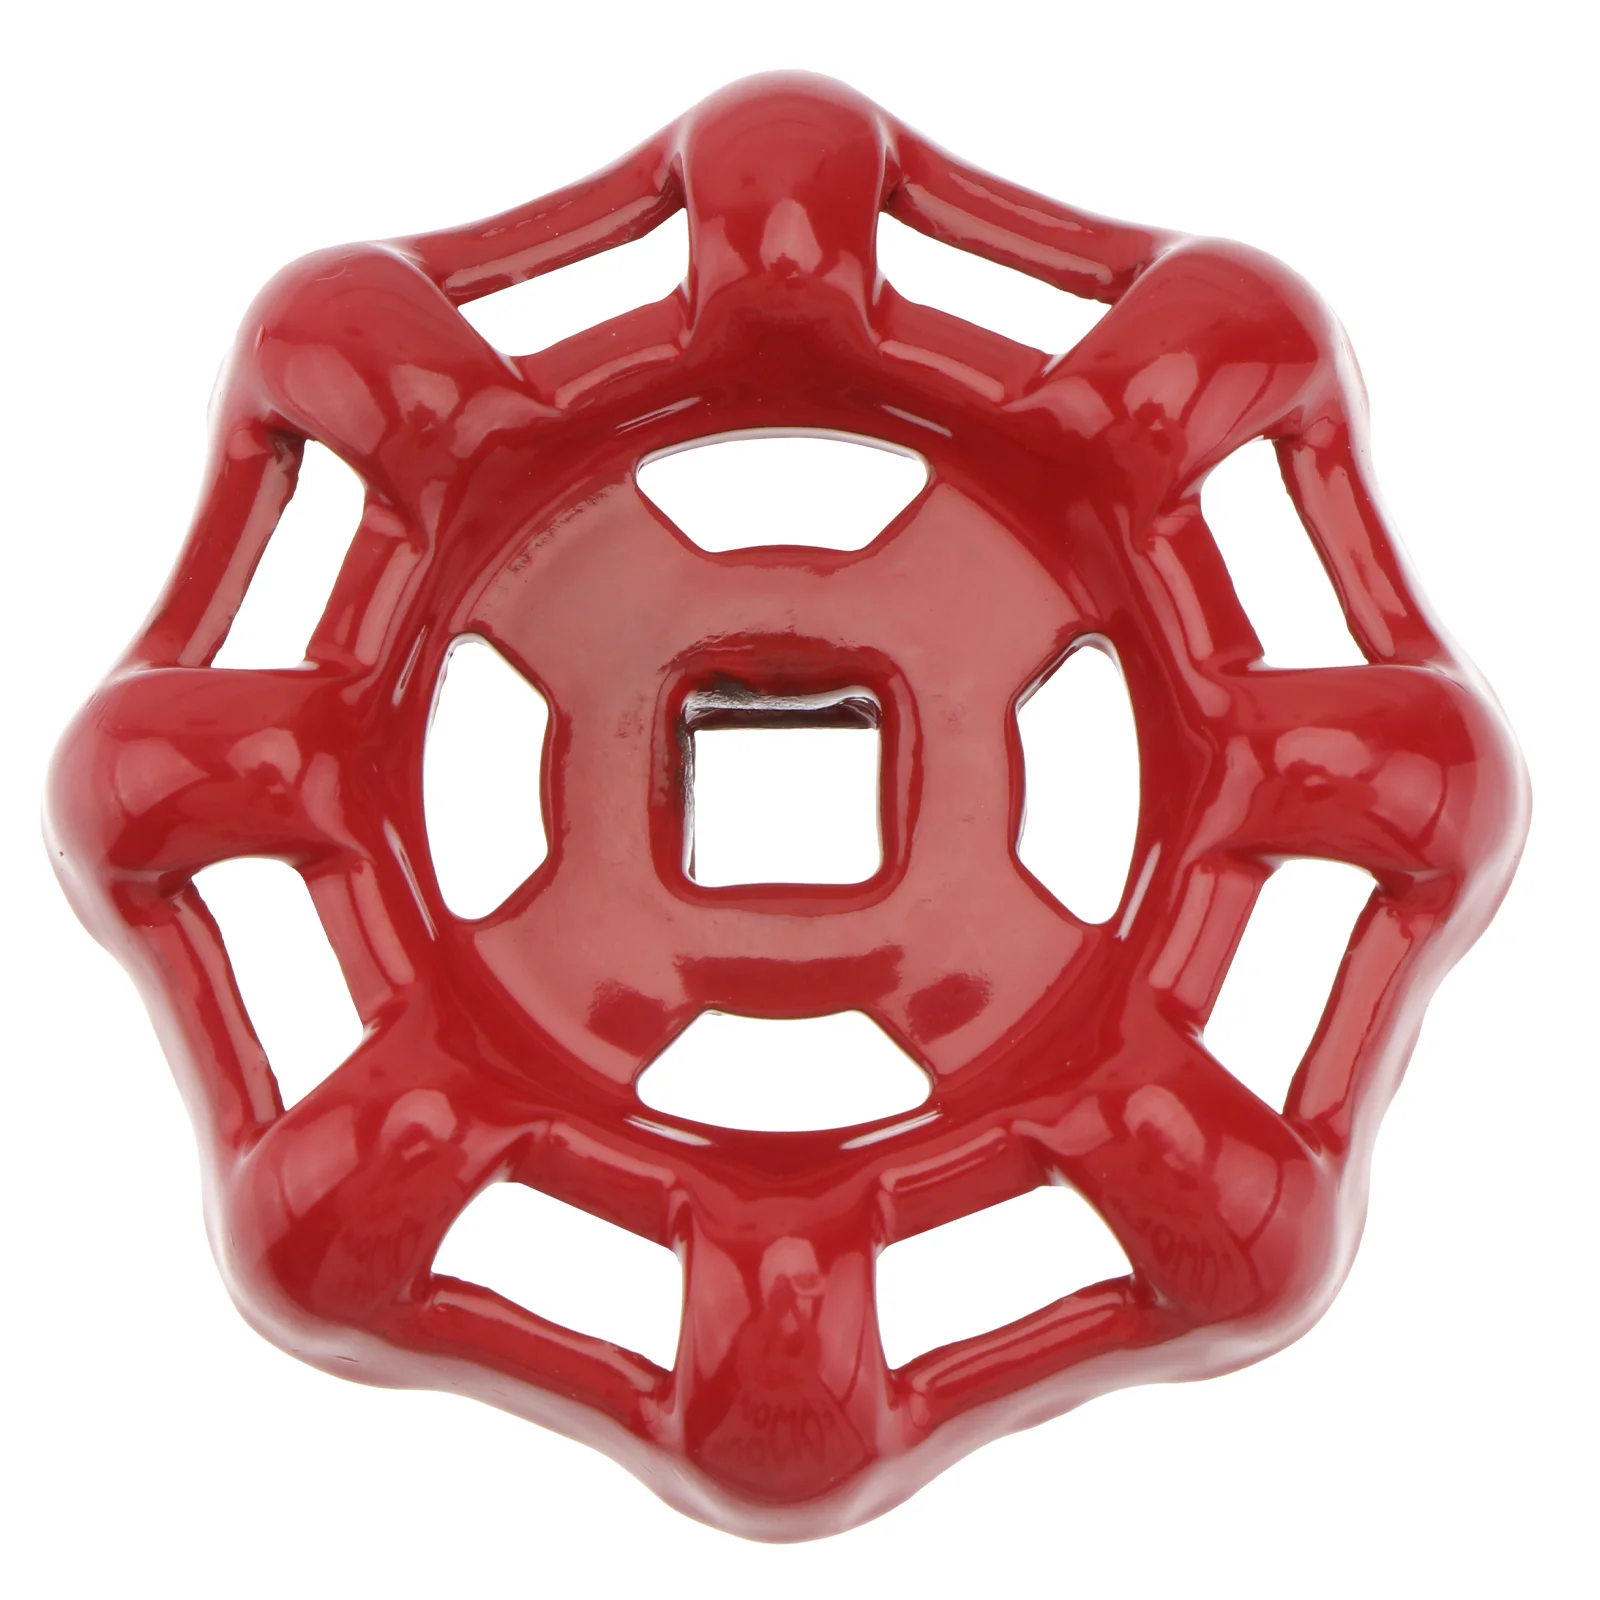 

6*6 Cast Iron Valve Handle Gate Valve Ball Valve Hand Wheel Shutoff Value Decorative Water Pipe Fittings (Red)